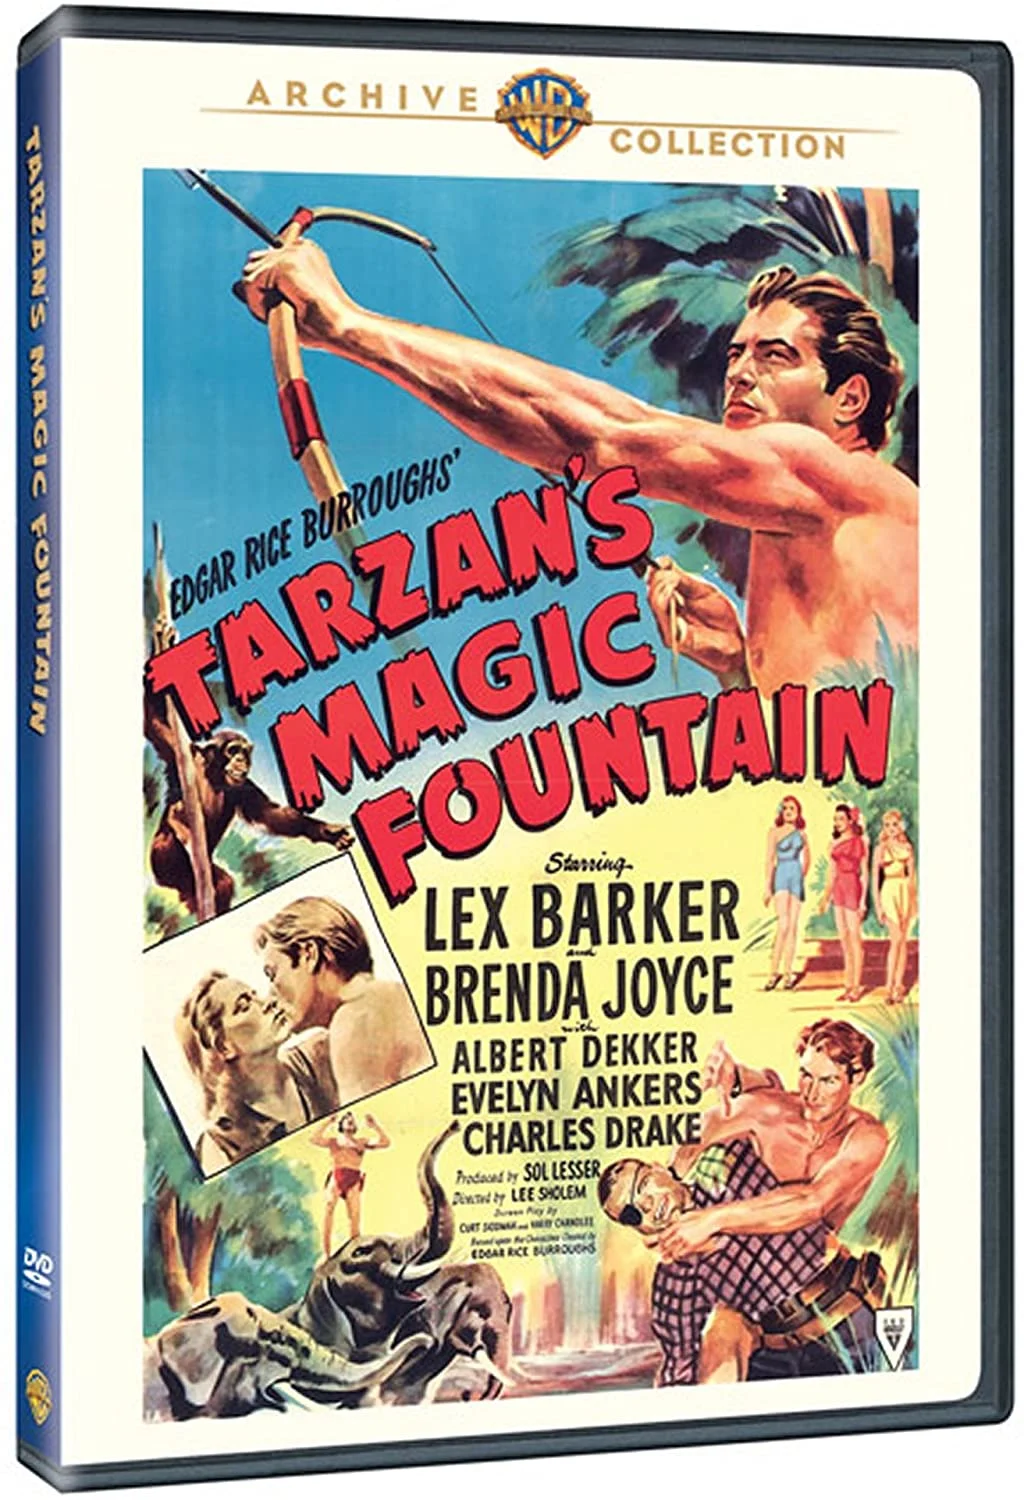 Tarzan’s Magic Fountain (DVD) (MOD) on MovieShack